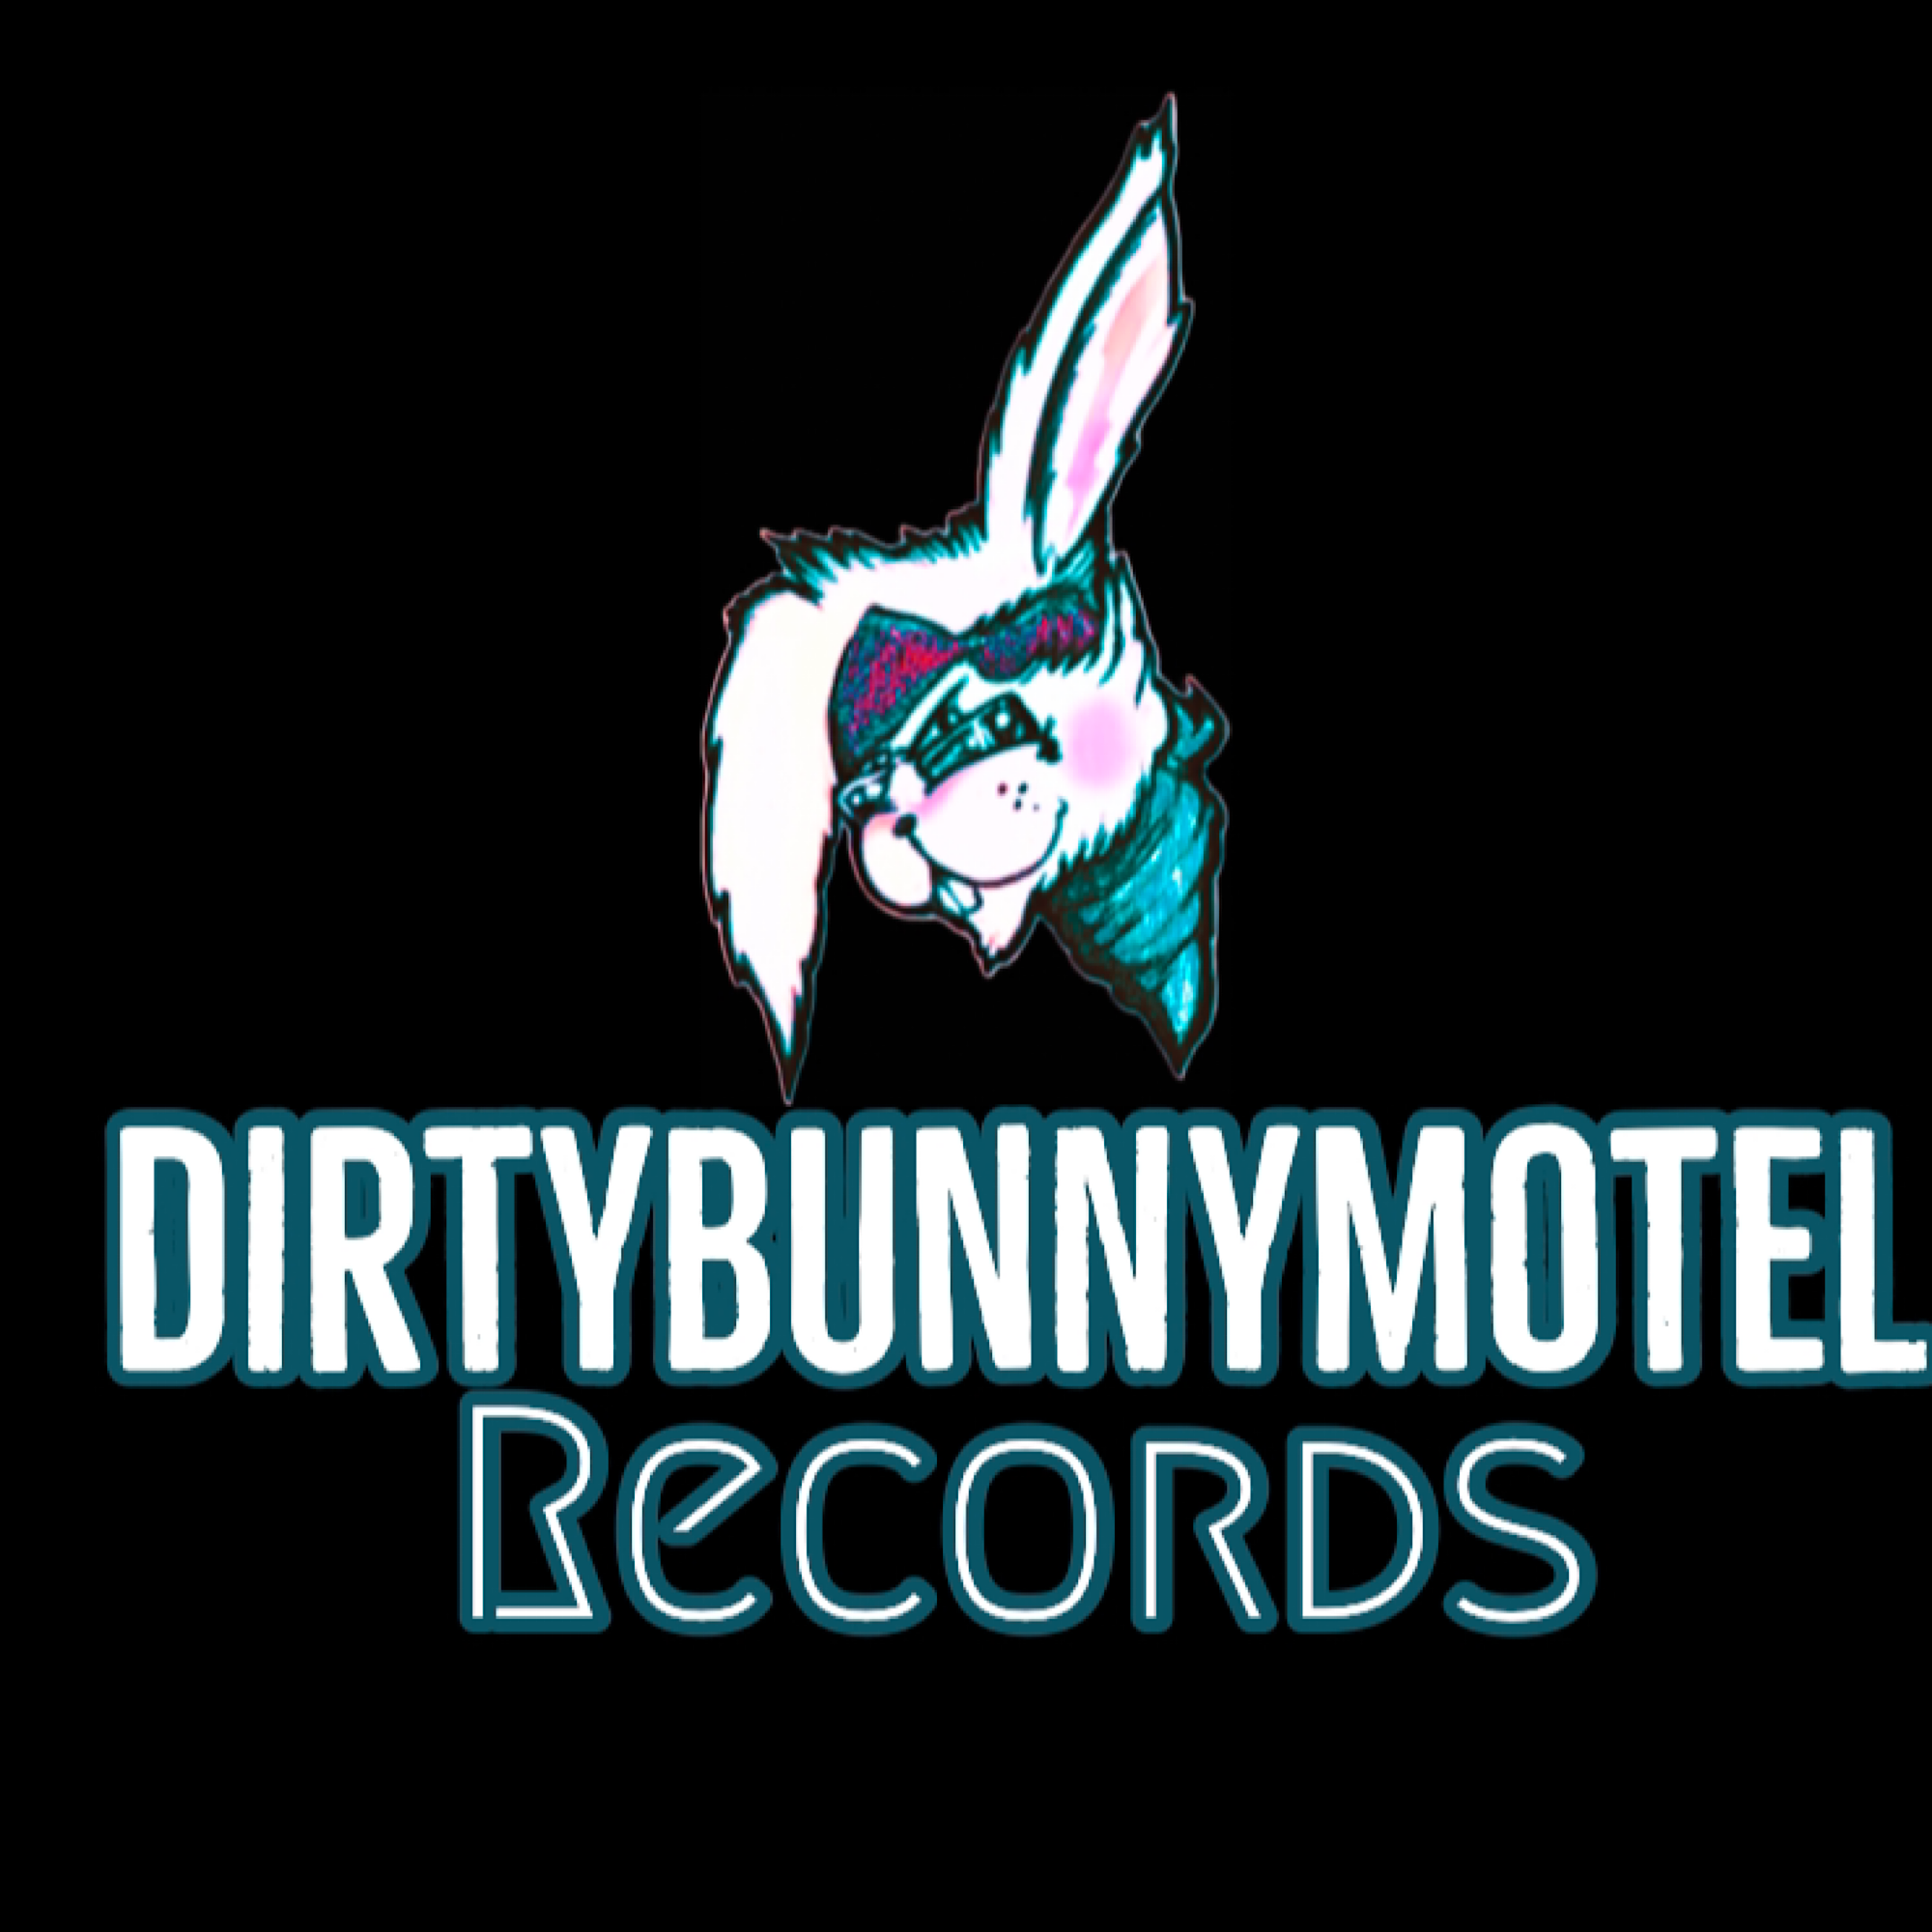 DirtyBunnyMotel Records